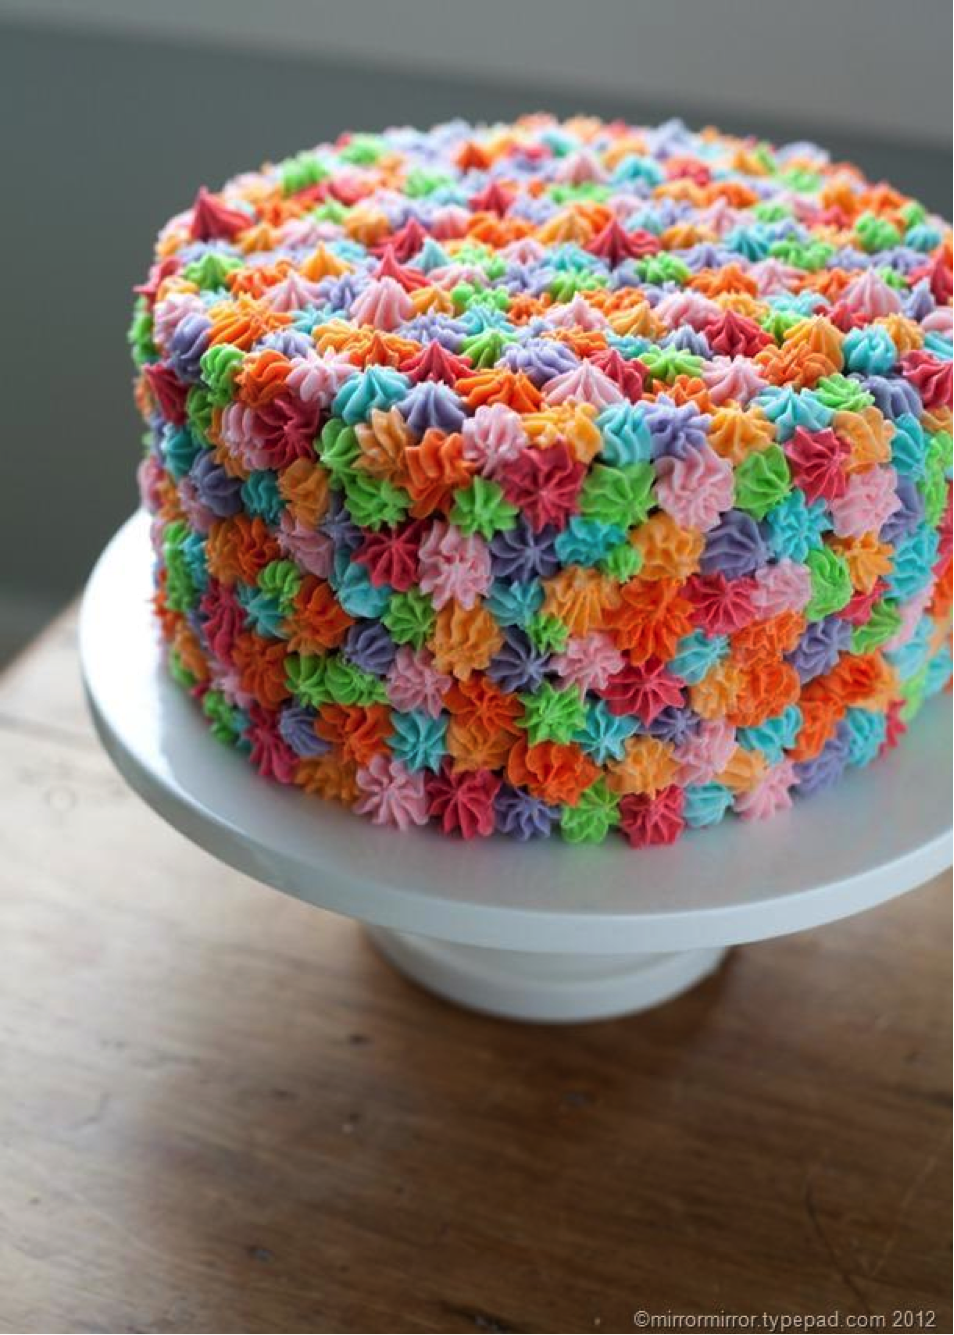 Colorful Cake Decorating Idea